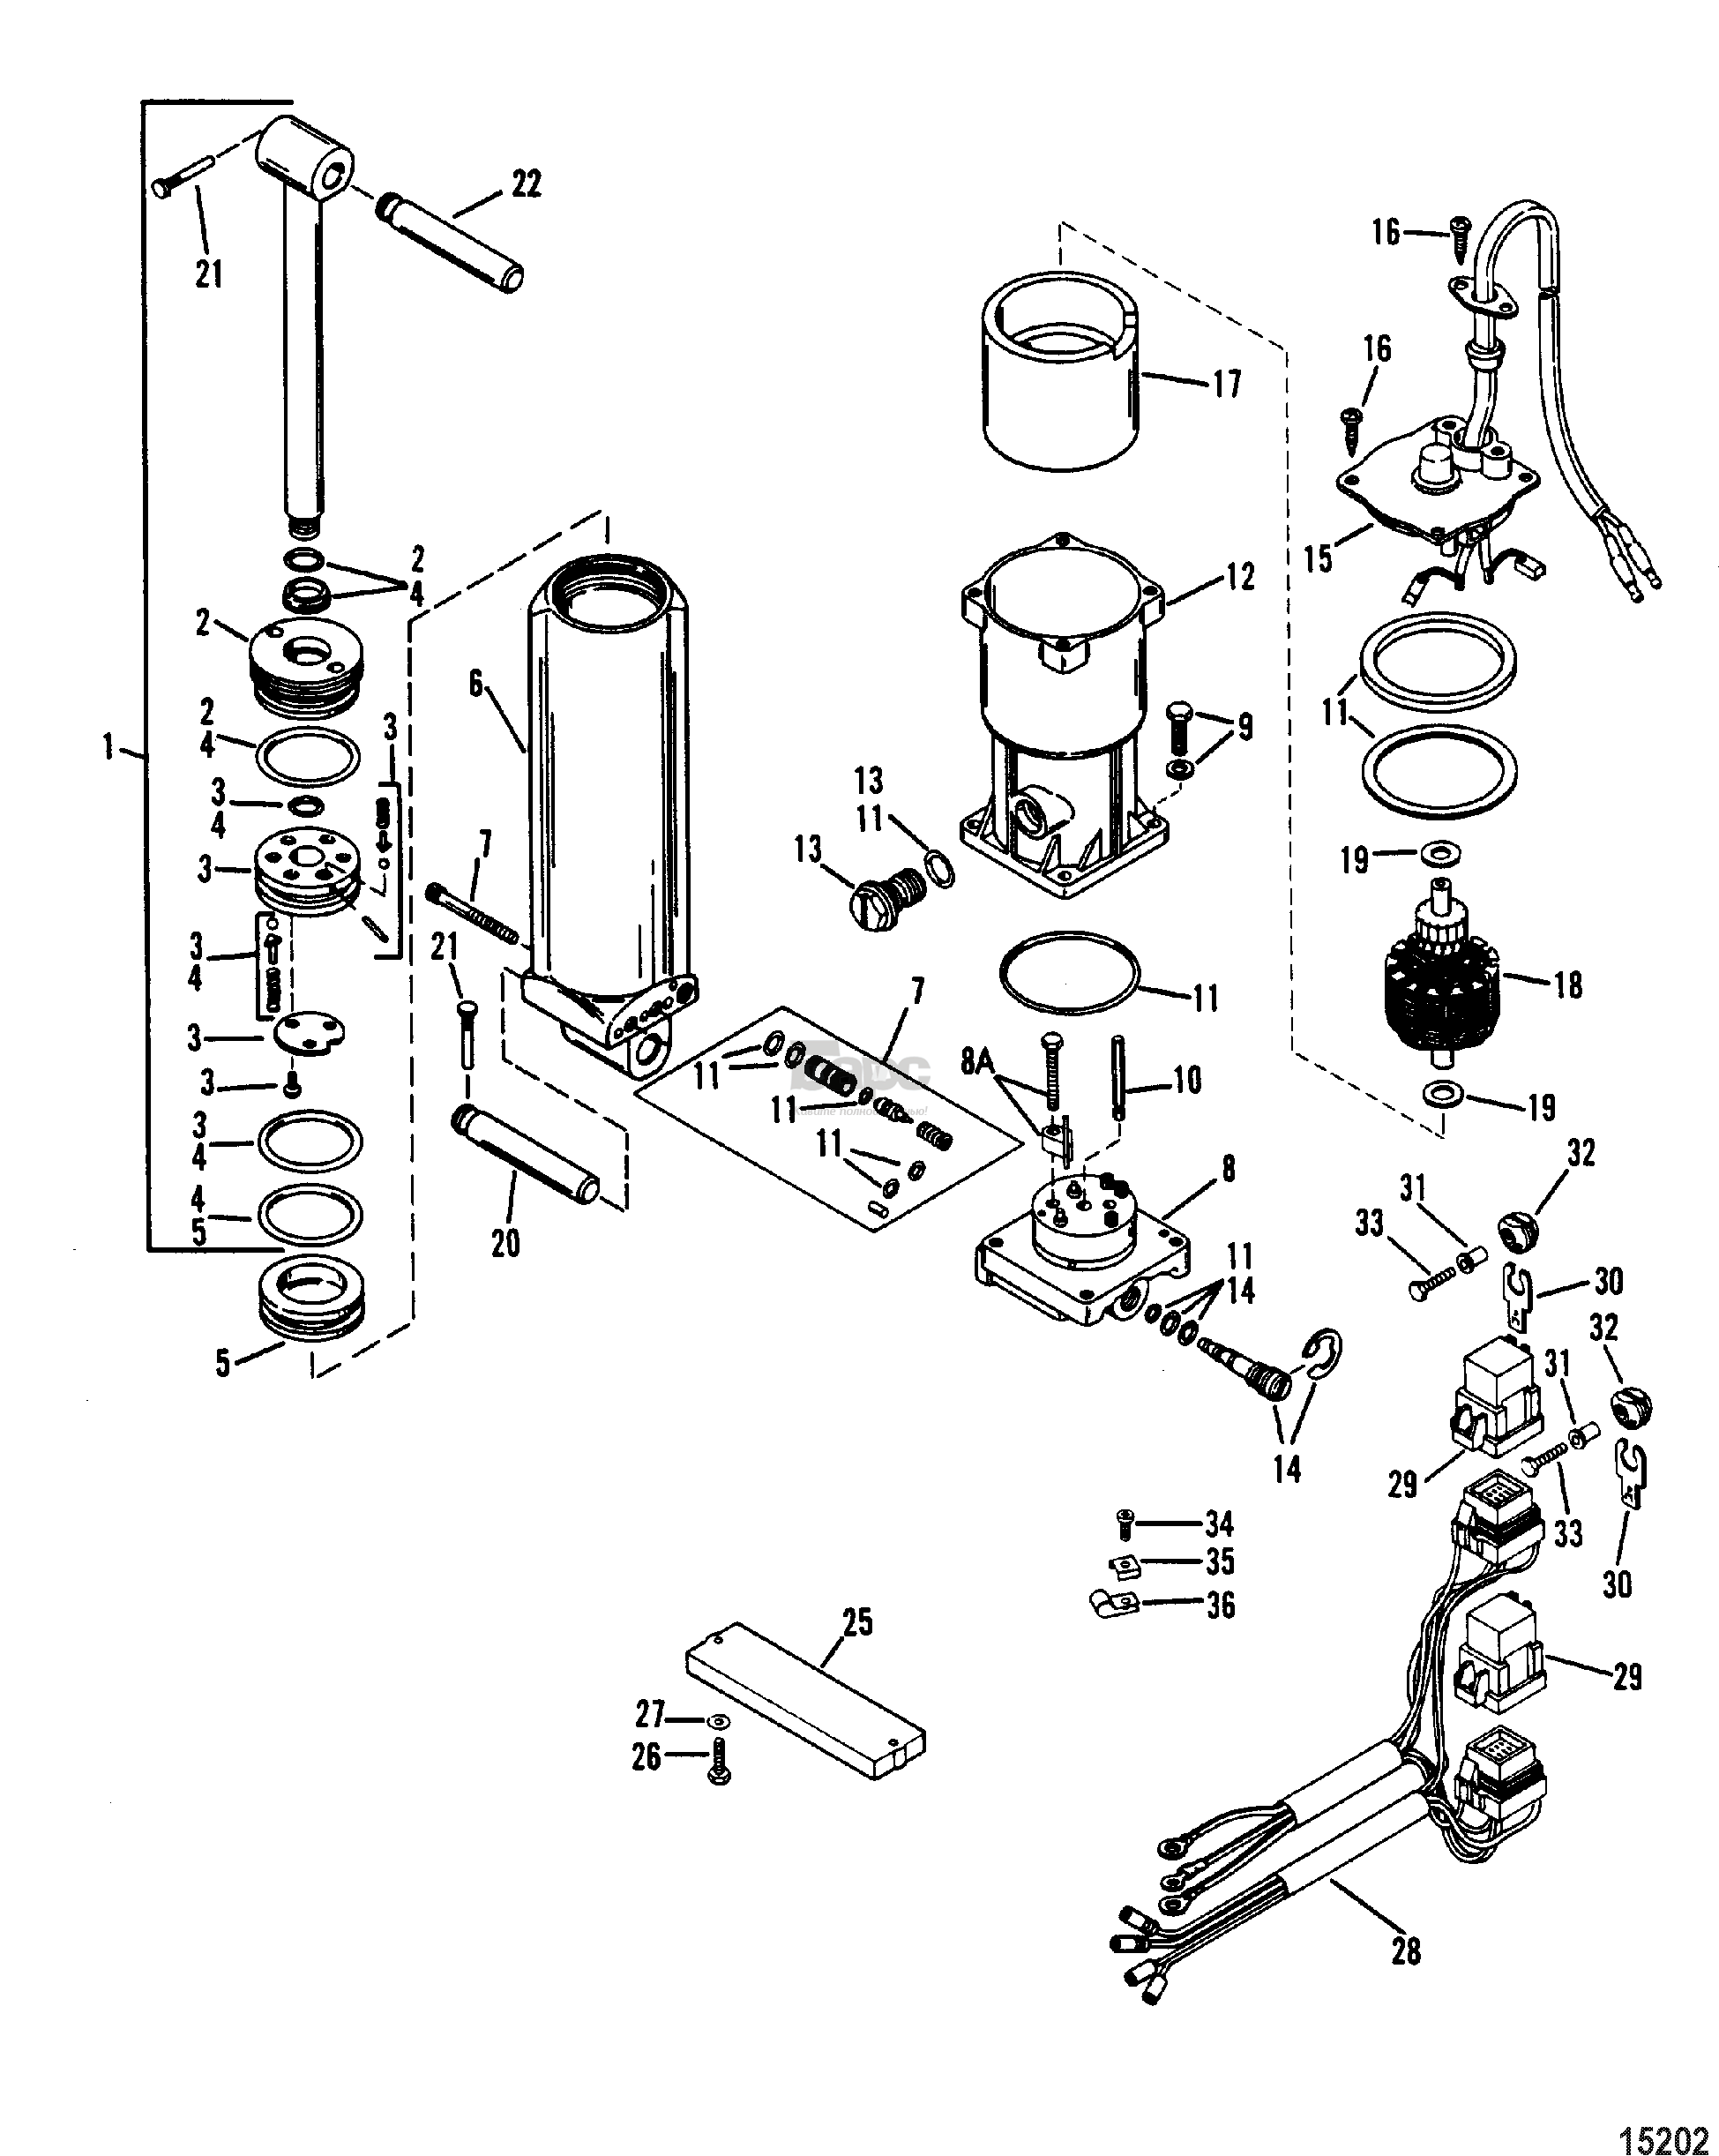 Power Trim Components(Single Ram Power Trim)